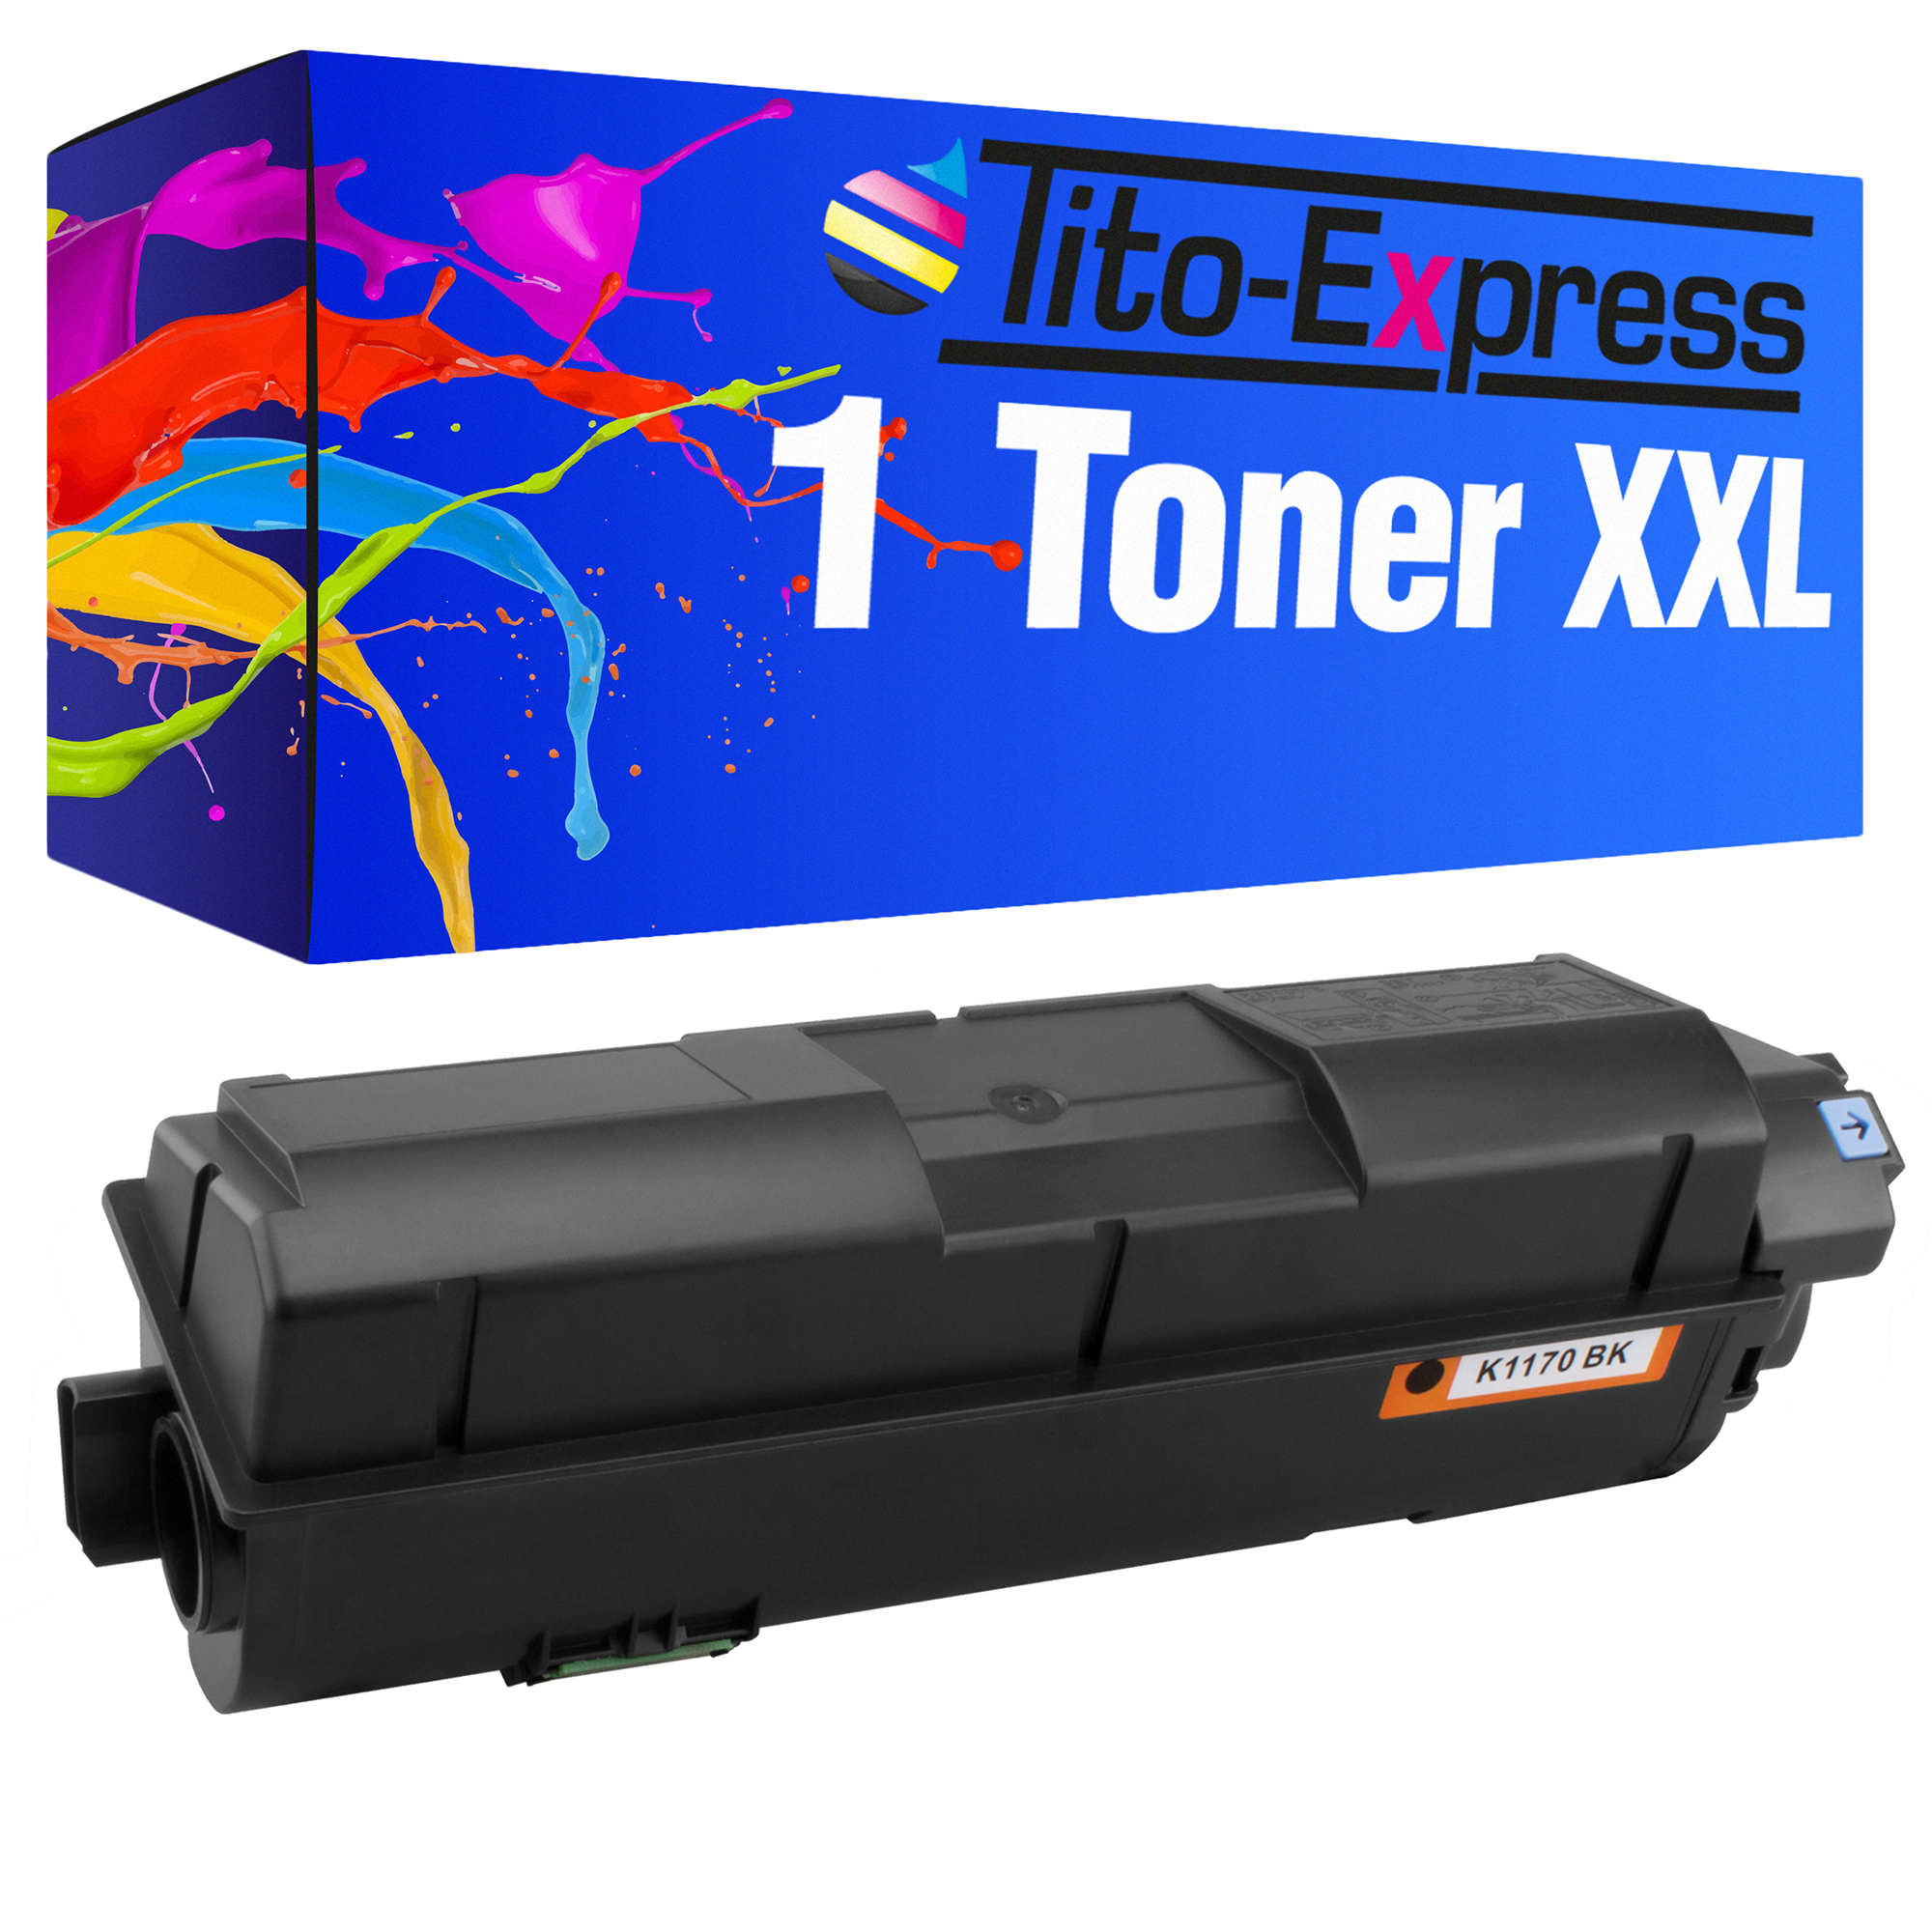 PLATINUMSERIE Toner Kyocera black ersetzt TITO-EXPRESS 1 (1T02S50NL0) TK-1170 Toner